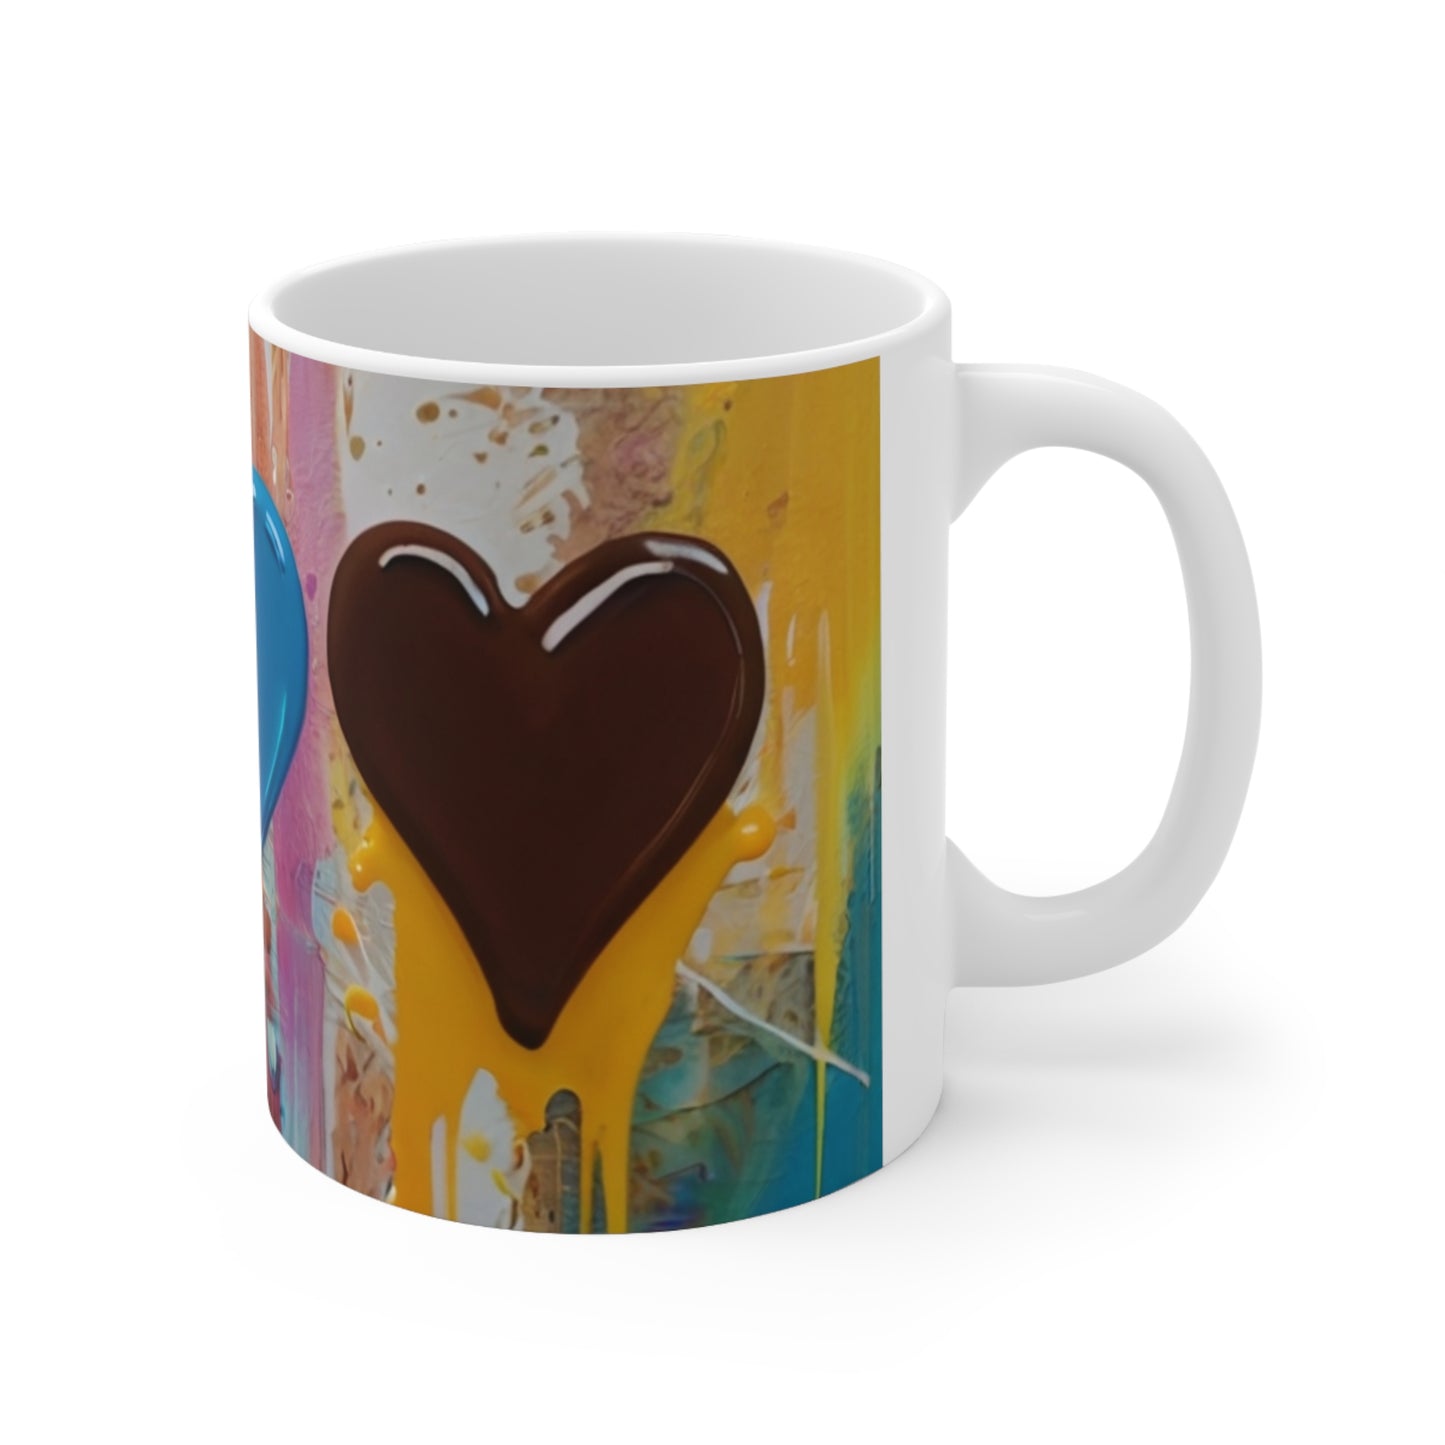 Messy Painting Red, Blue and Brown Love Hearts Mug - Ceramic Coffee Mug 11oz